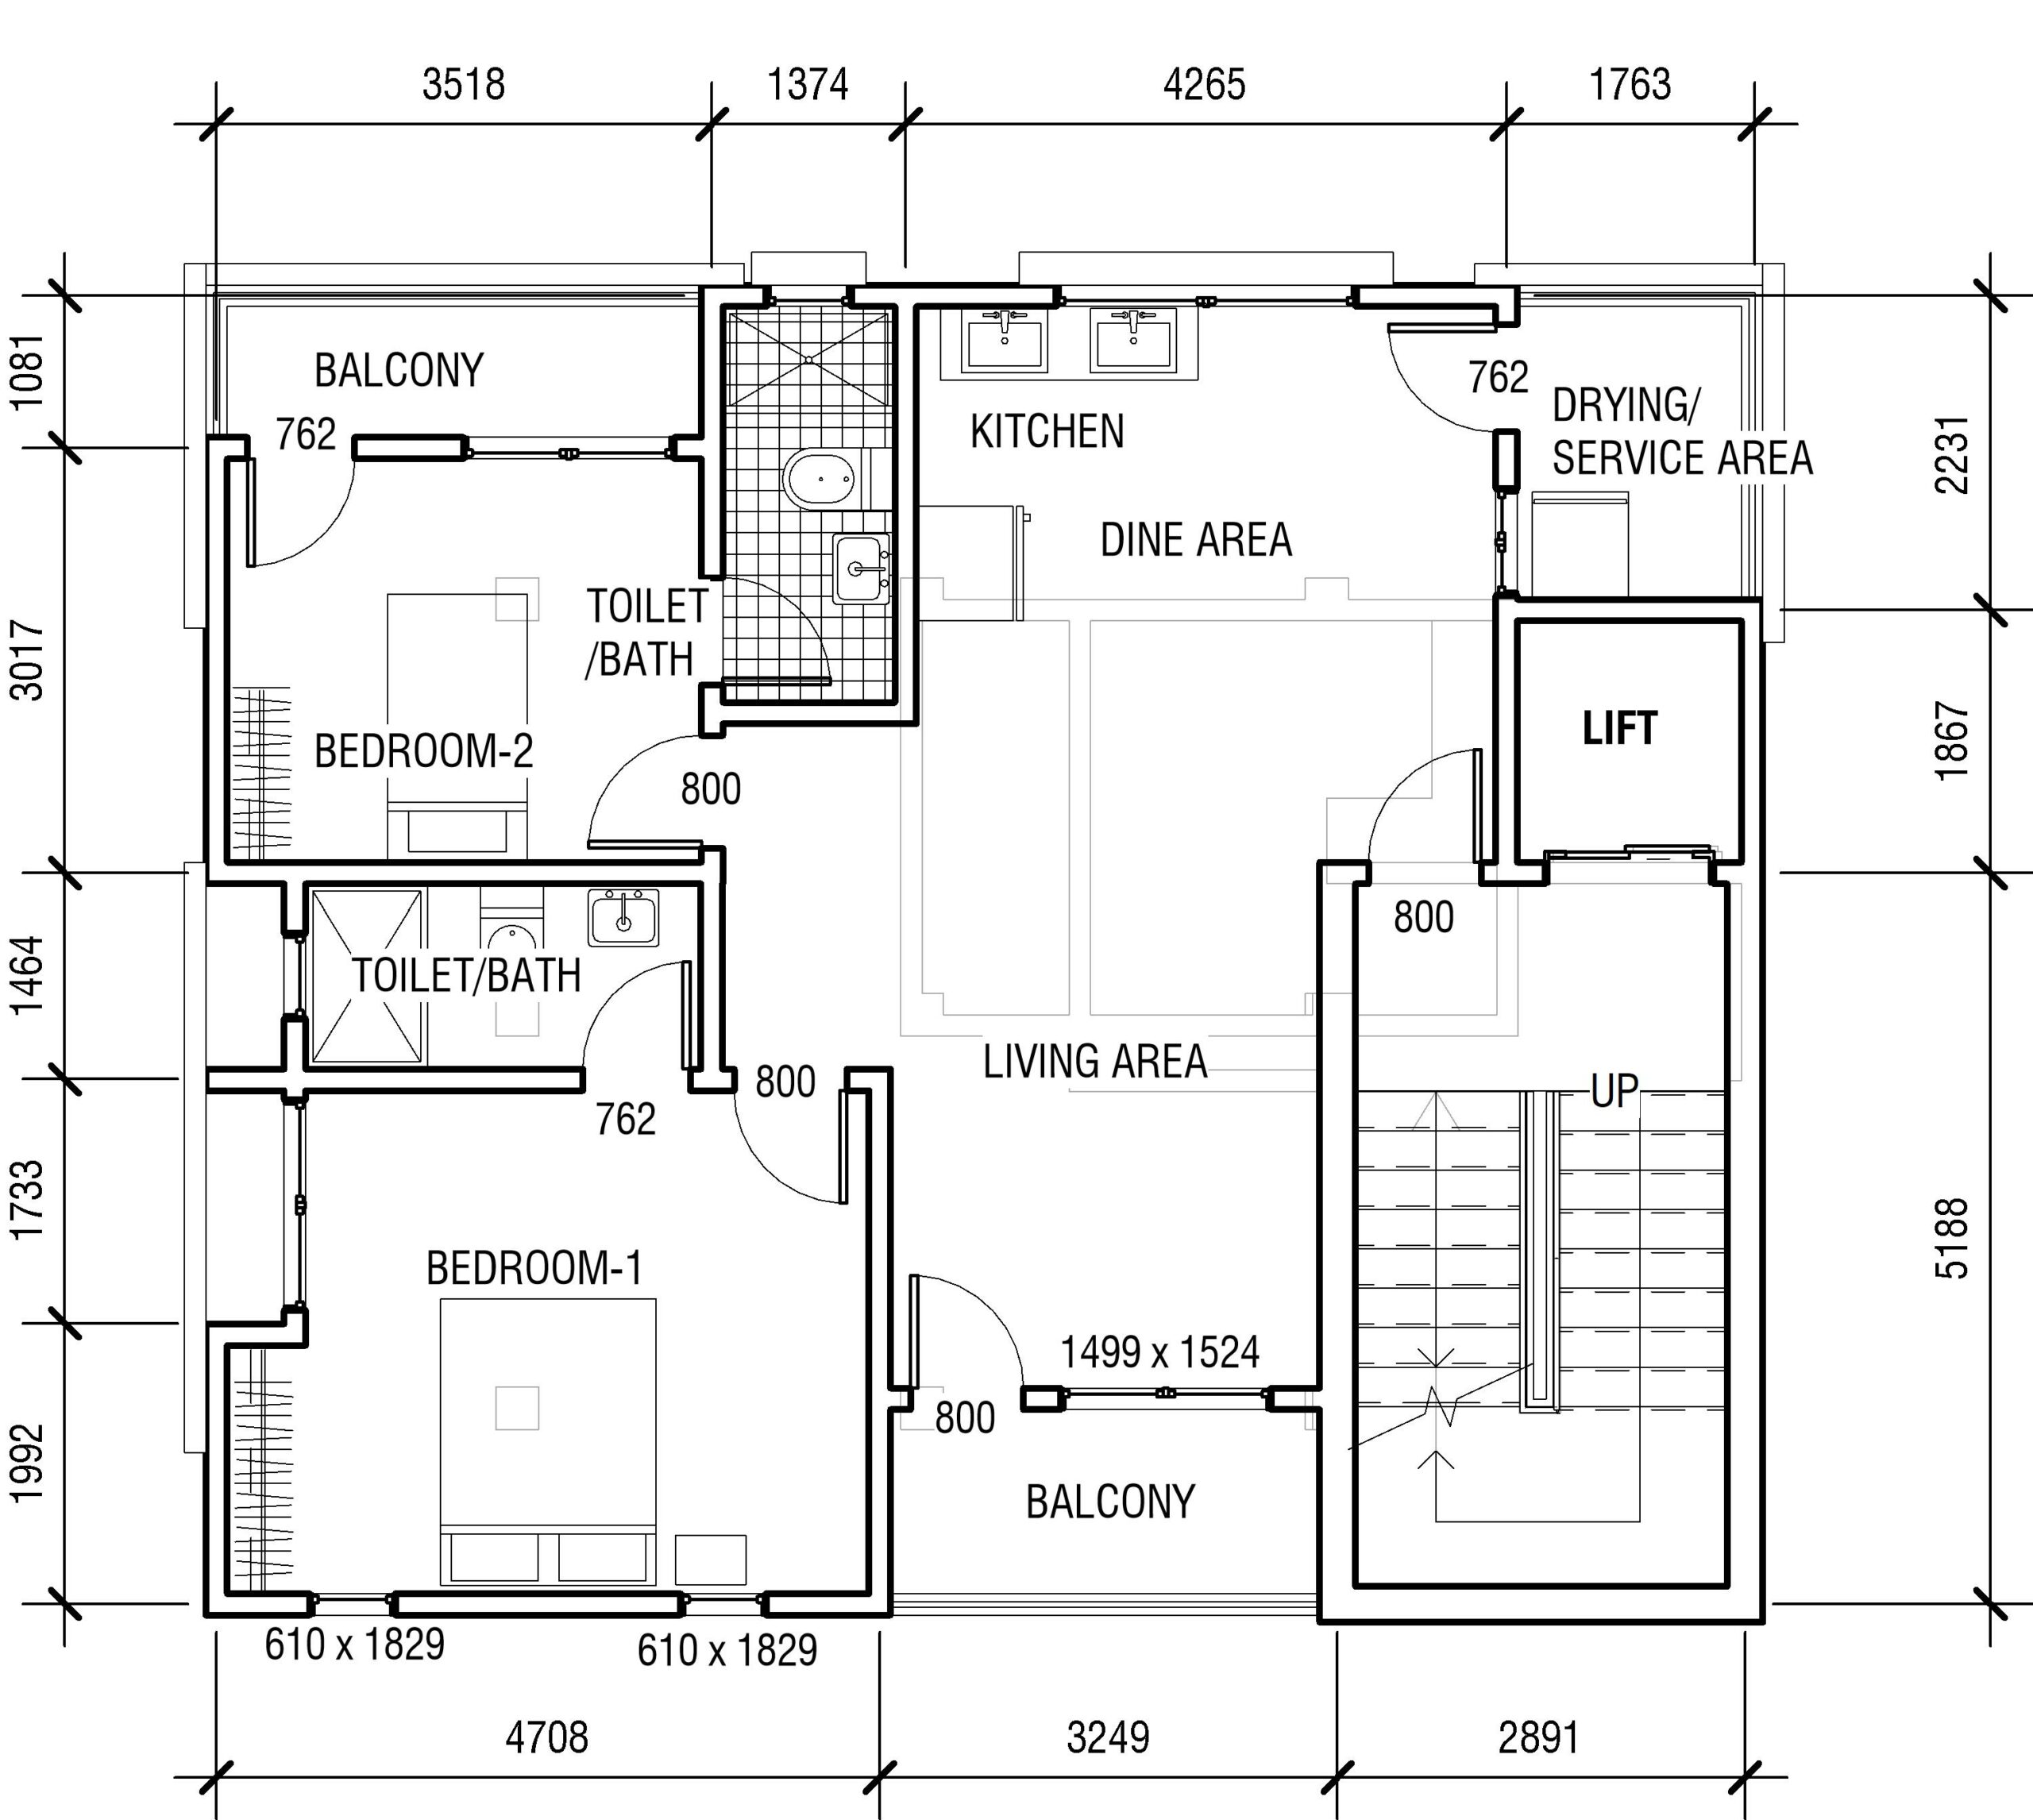 Residential Condo_R21 - PlanMarketplace